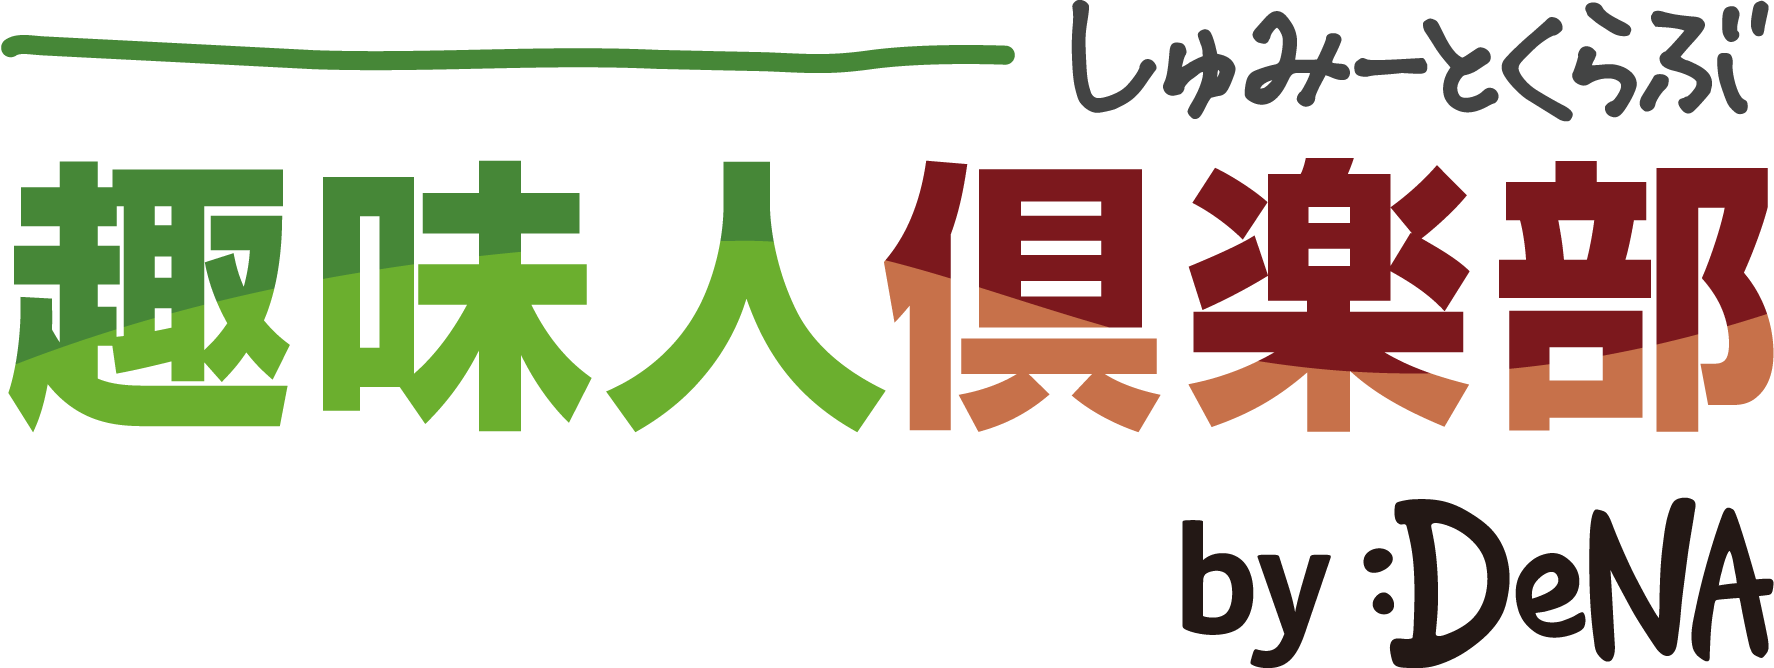 Japanese IT Company Logo - Shumito Club: DeNA's social network for seniors in Japan | THE BRIDGE